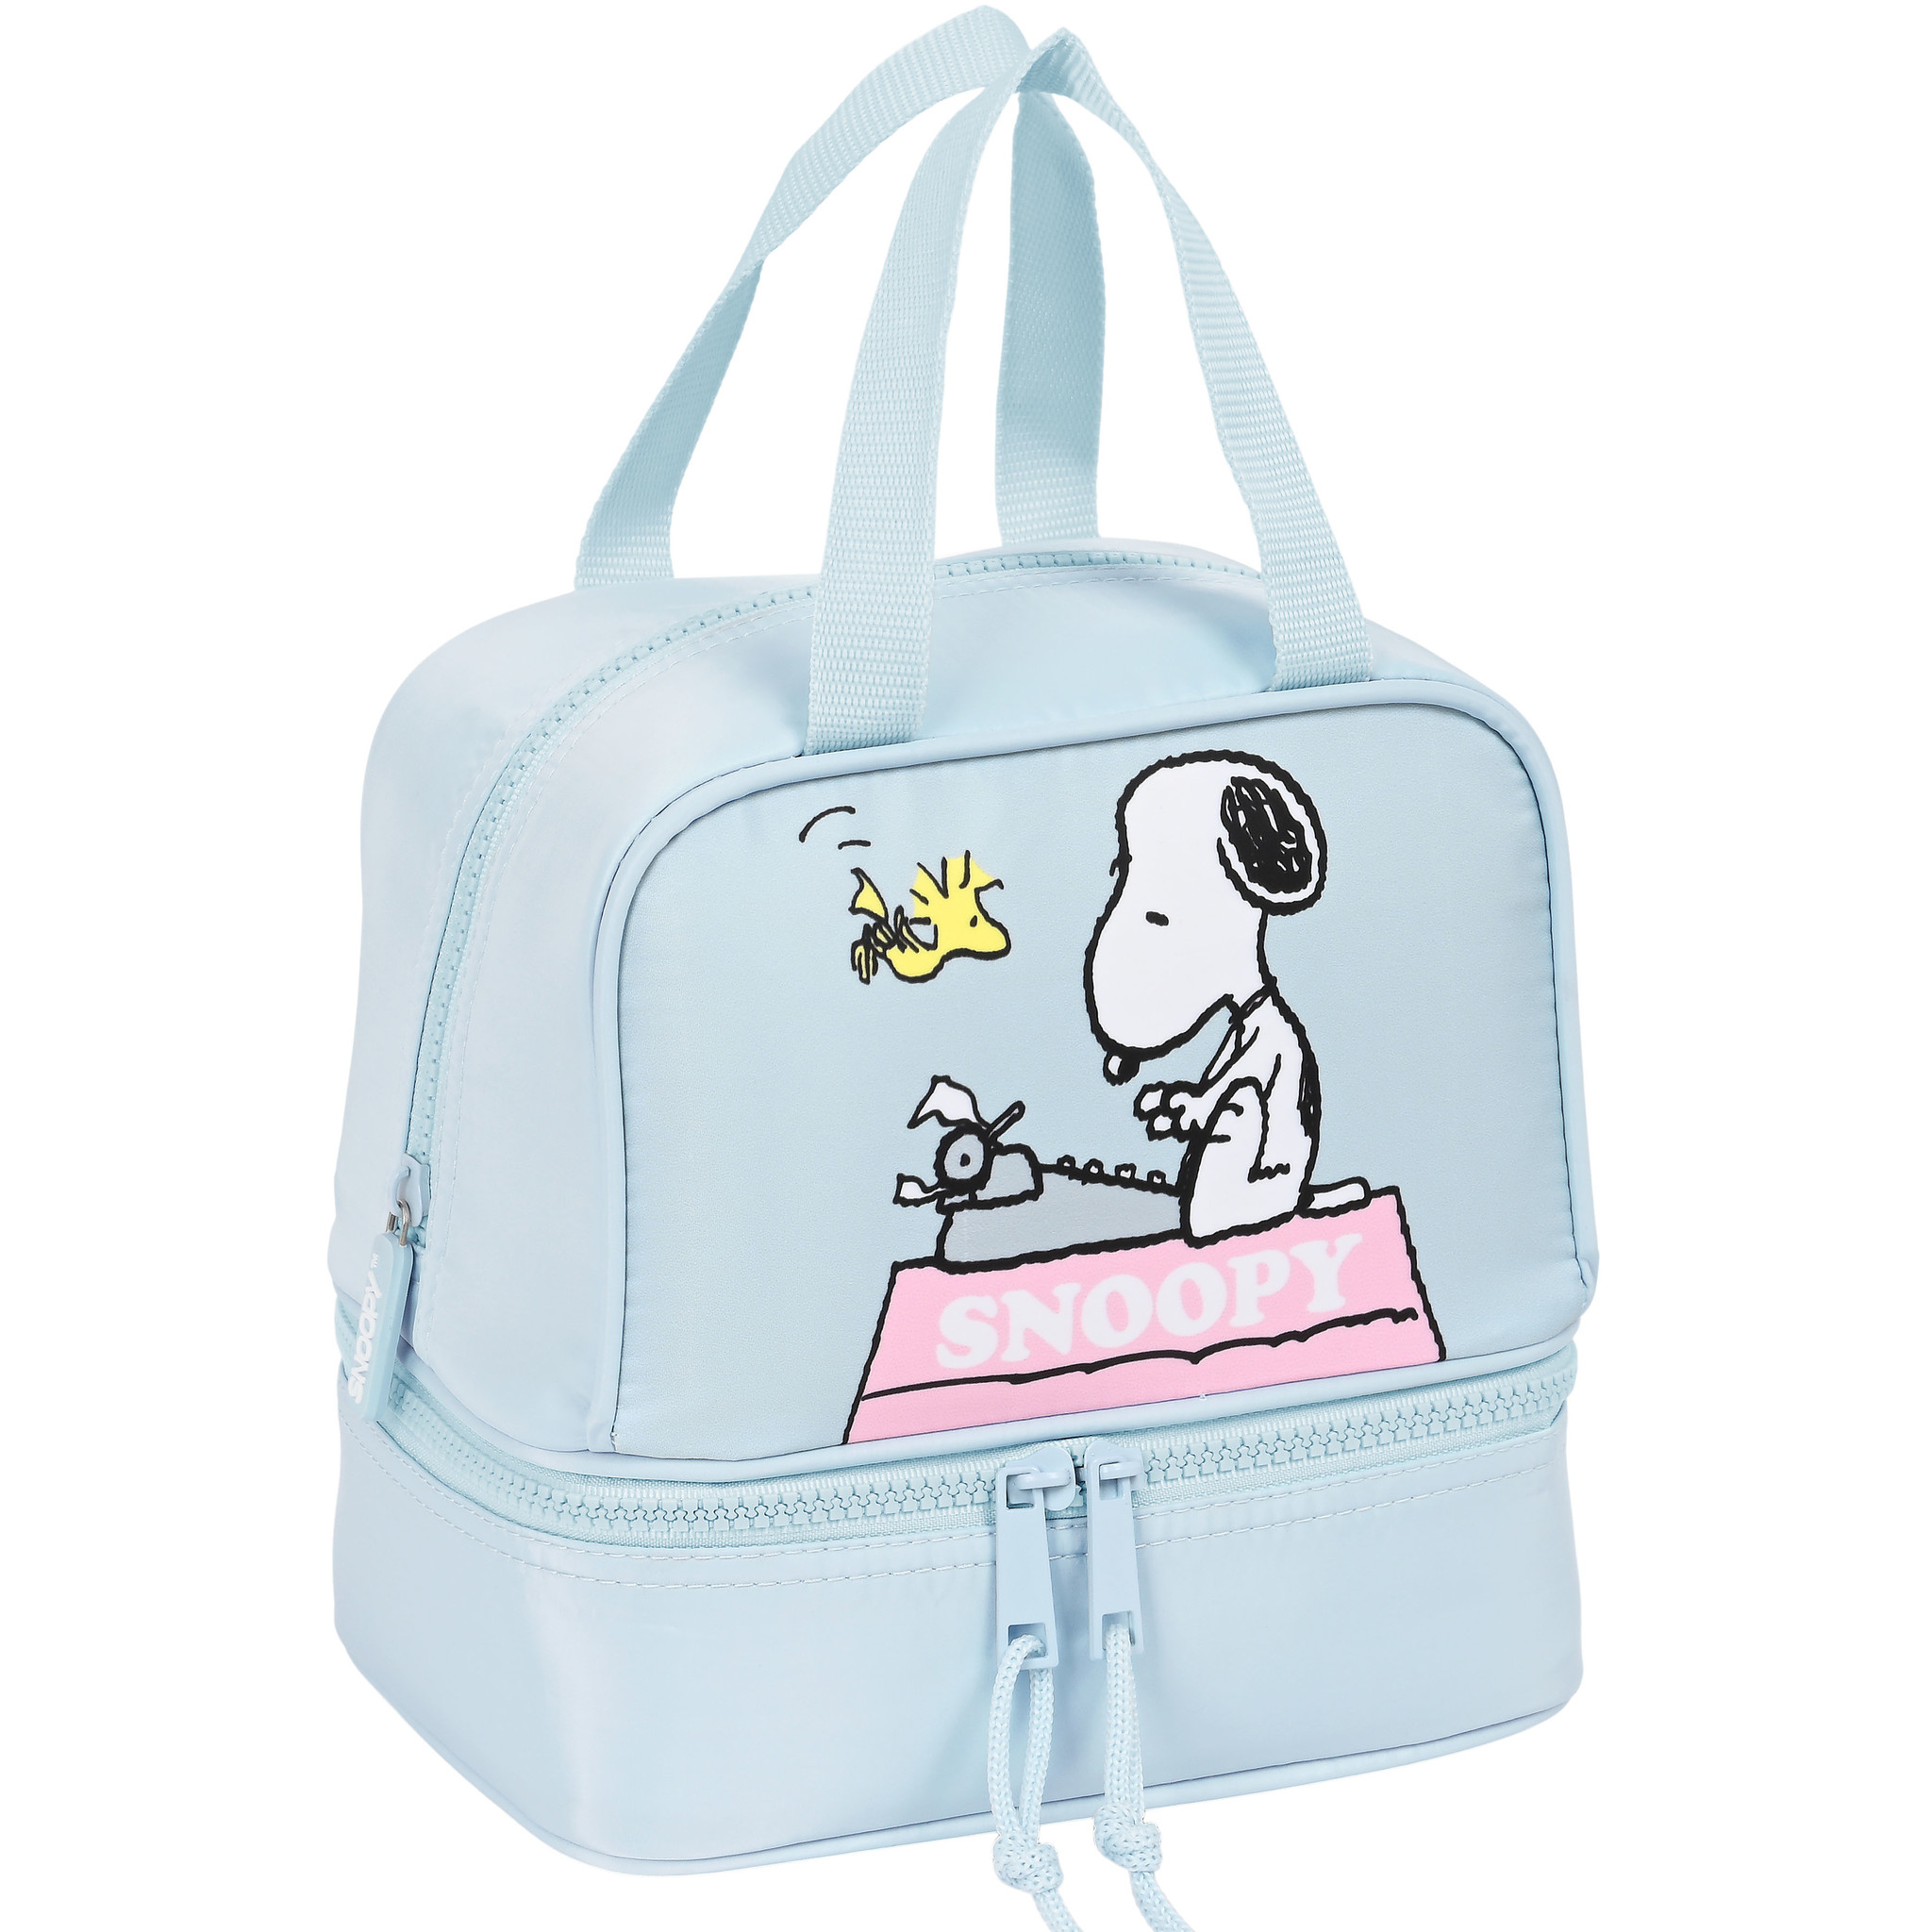 Amazon.com: CafePress Peanuts Snoopy Canvas Tote Shopping Bag : Home &  Kitchen